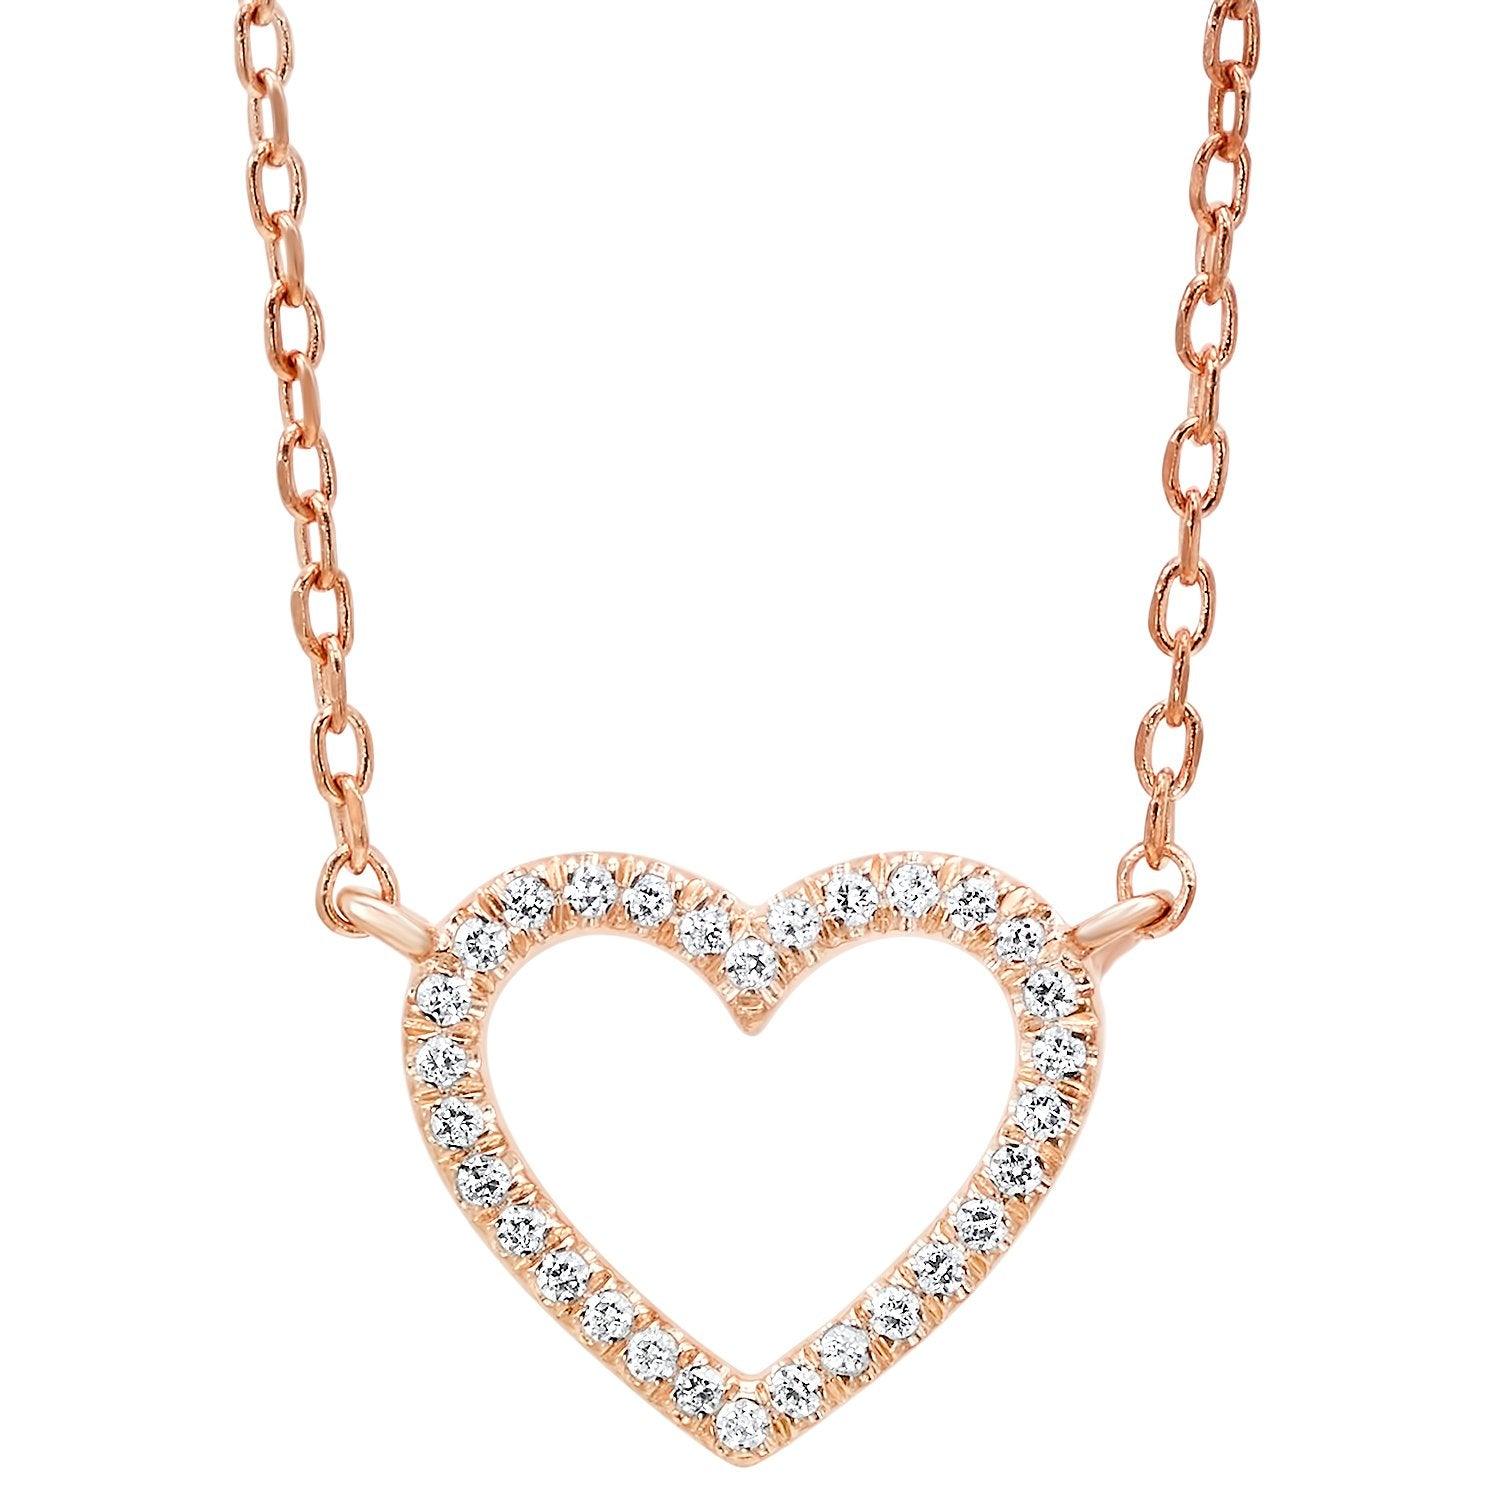 BW James Jewelers Necklace 14k Rose Gold Diamond Heart Pendant